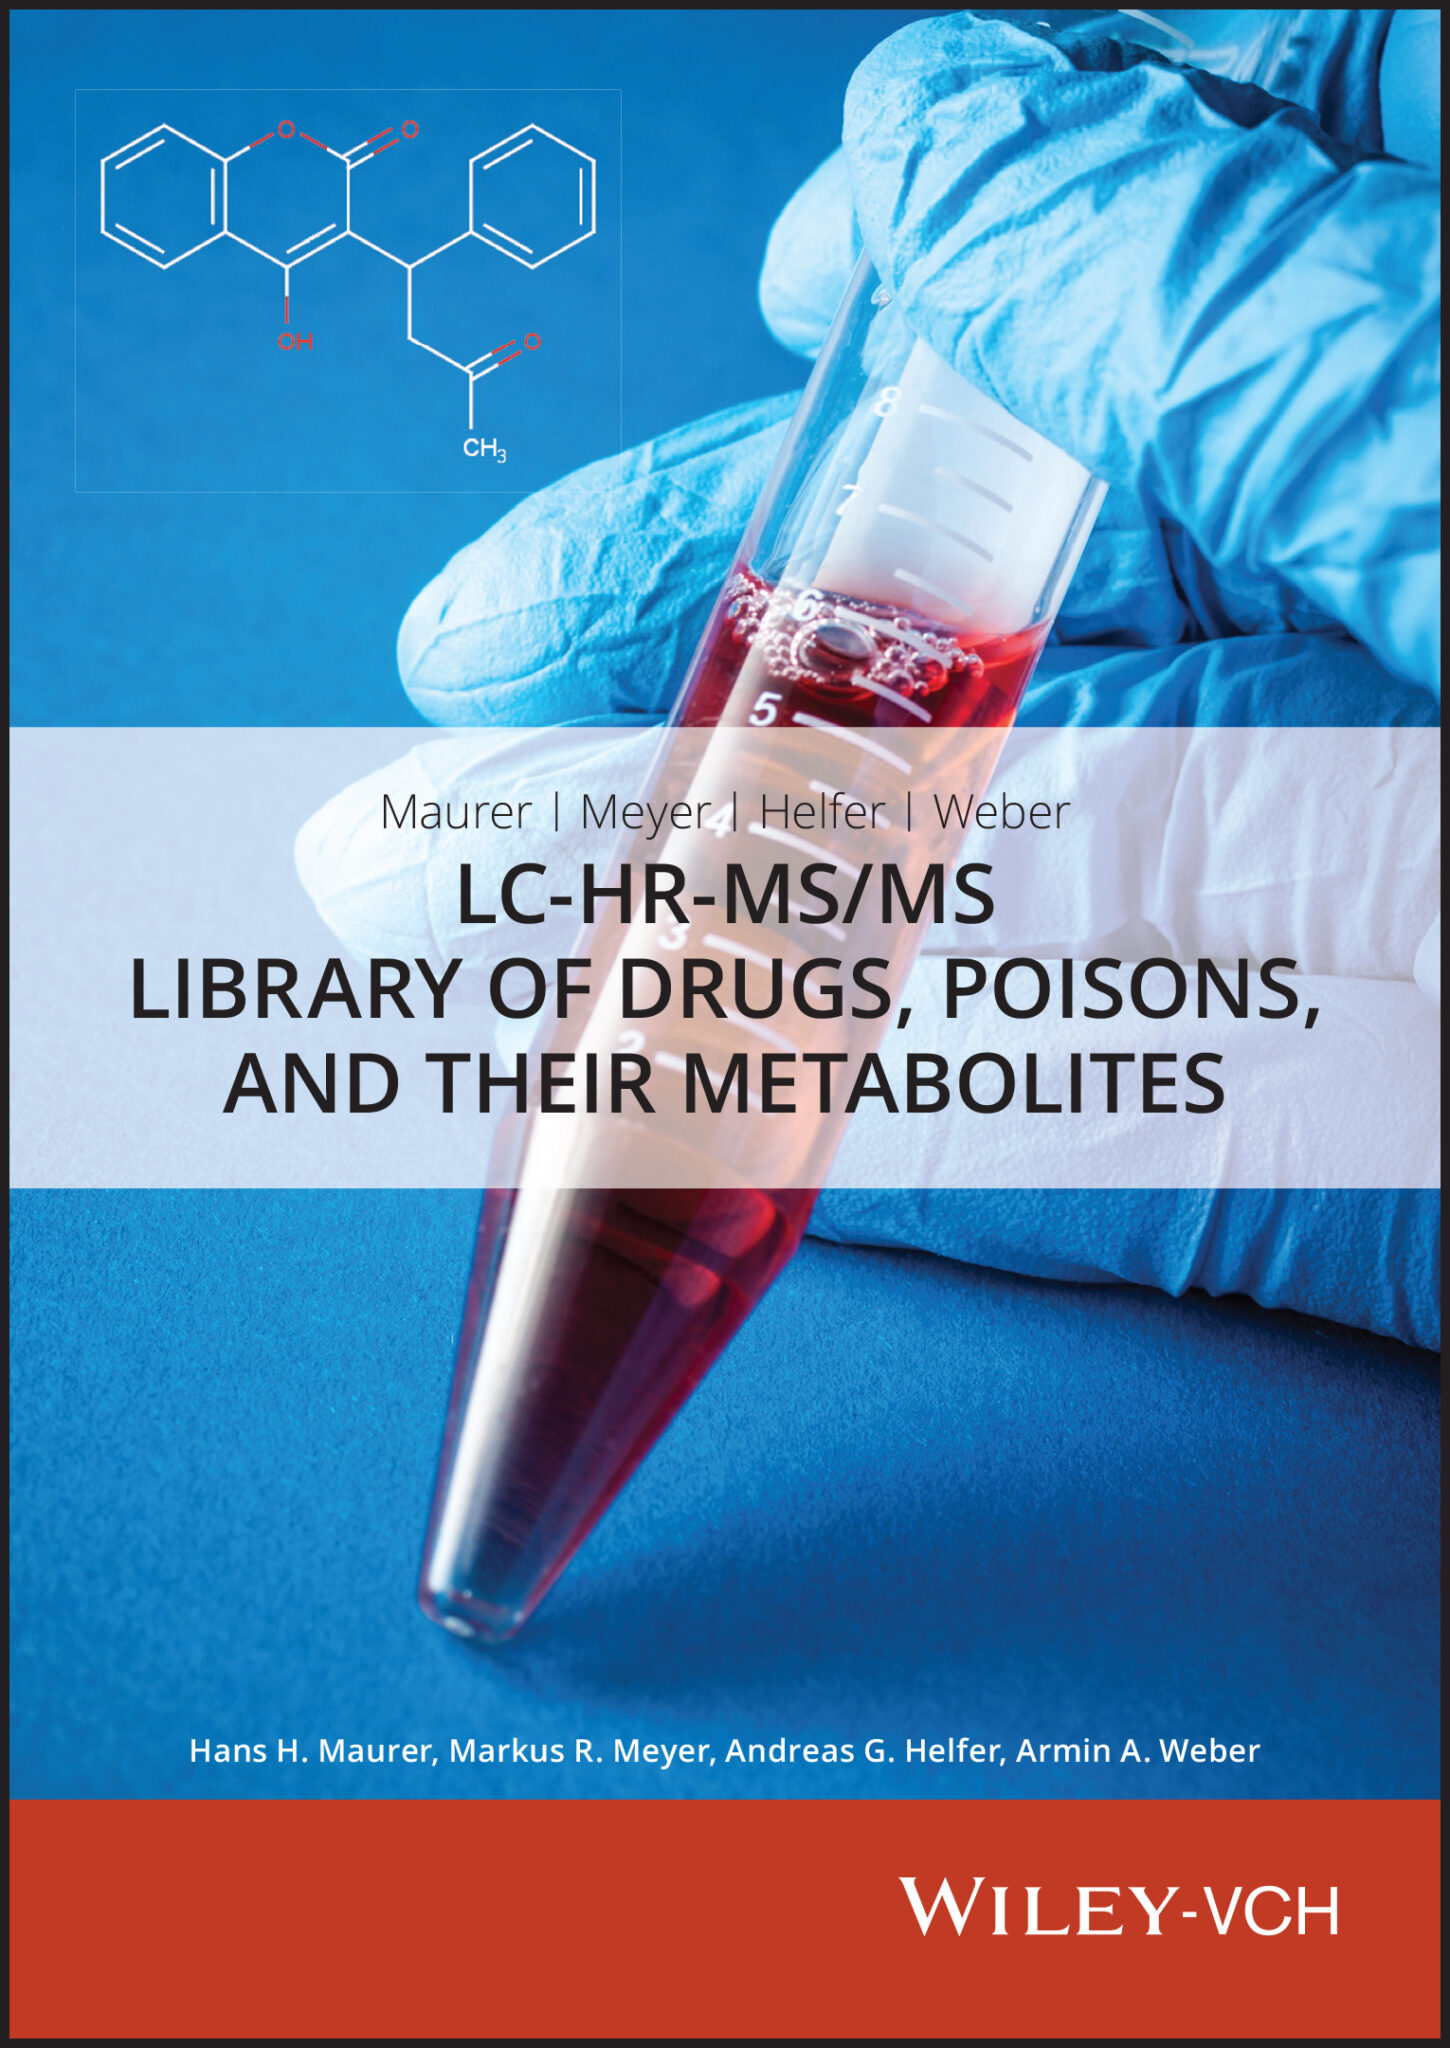 Wiley LC-HR-MS/MS knihovna drog, jedů a jejich metabolitů